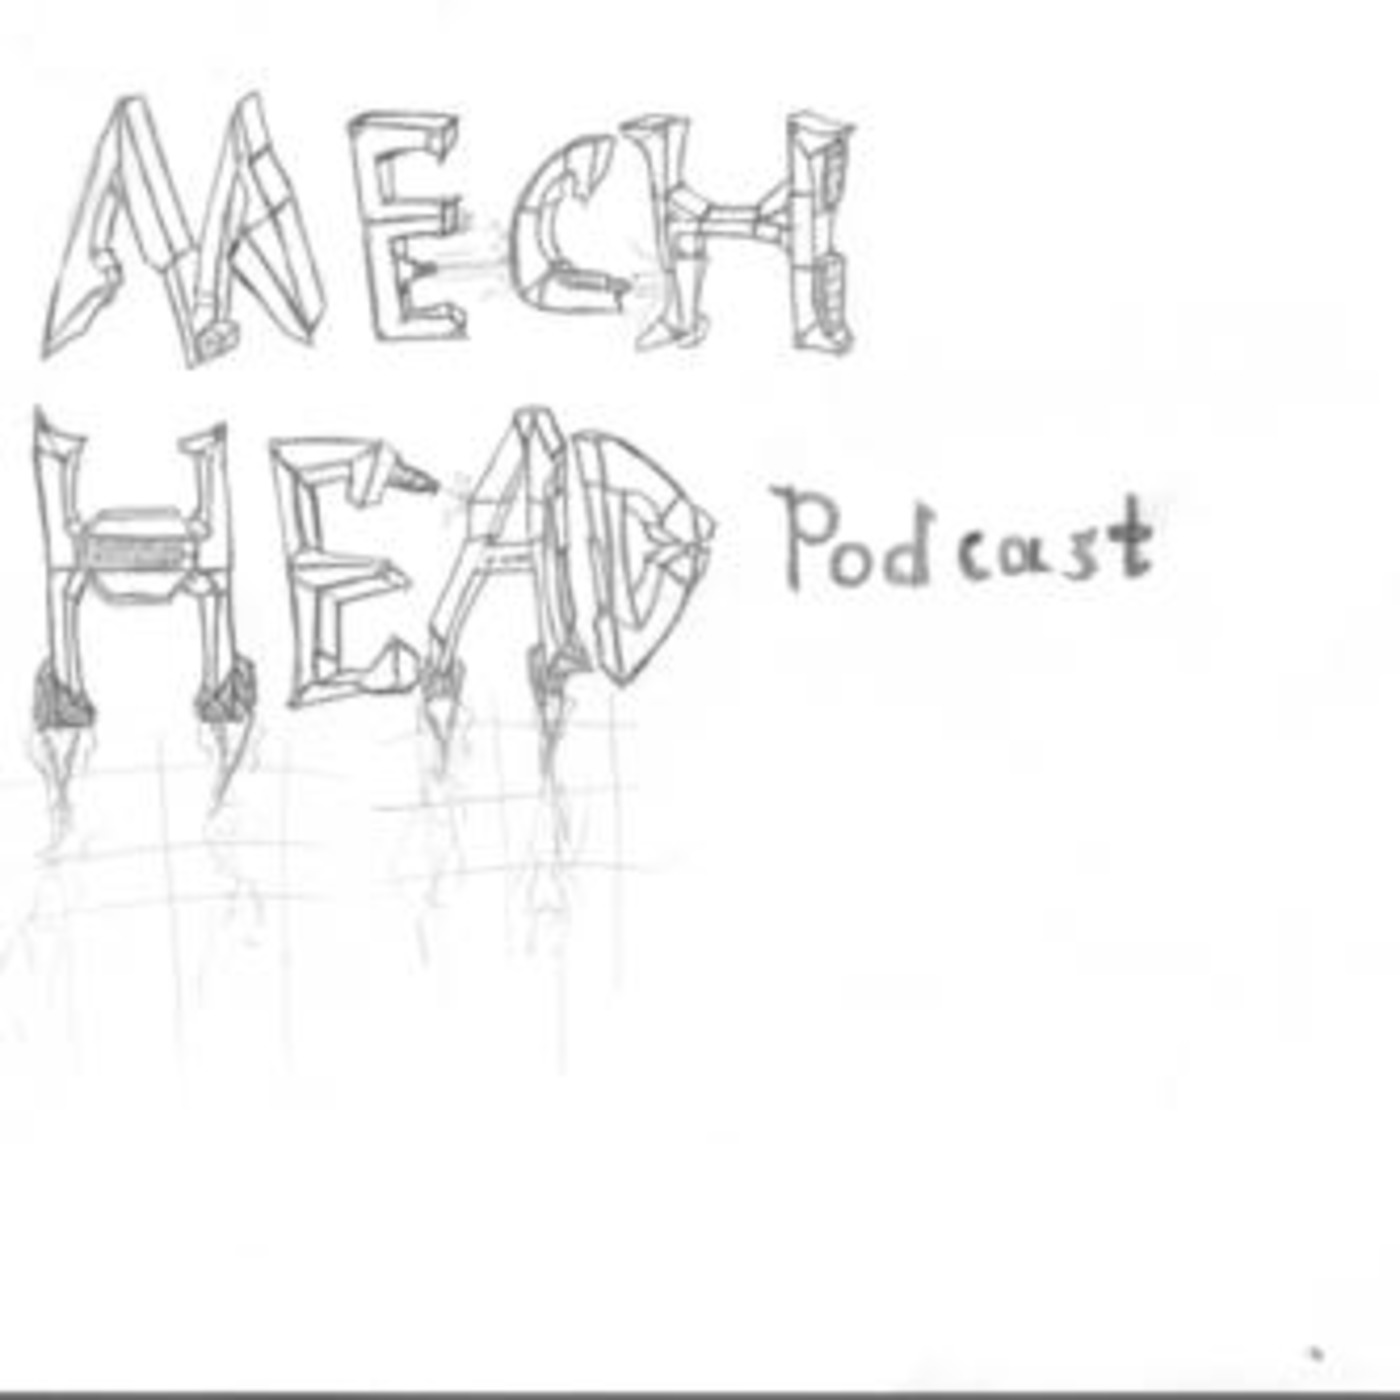 MechHead Podcast #35!